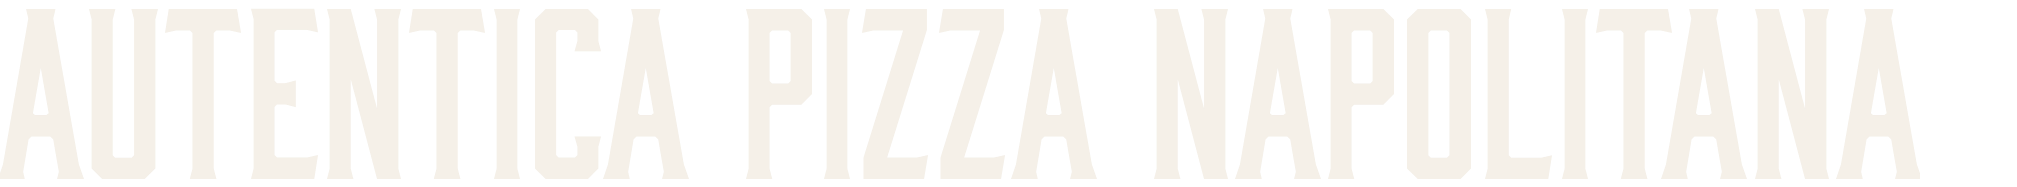 Auténtica pizza napolitana 1